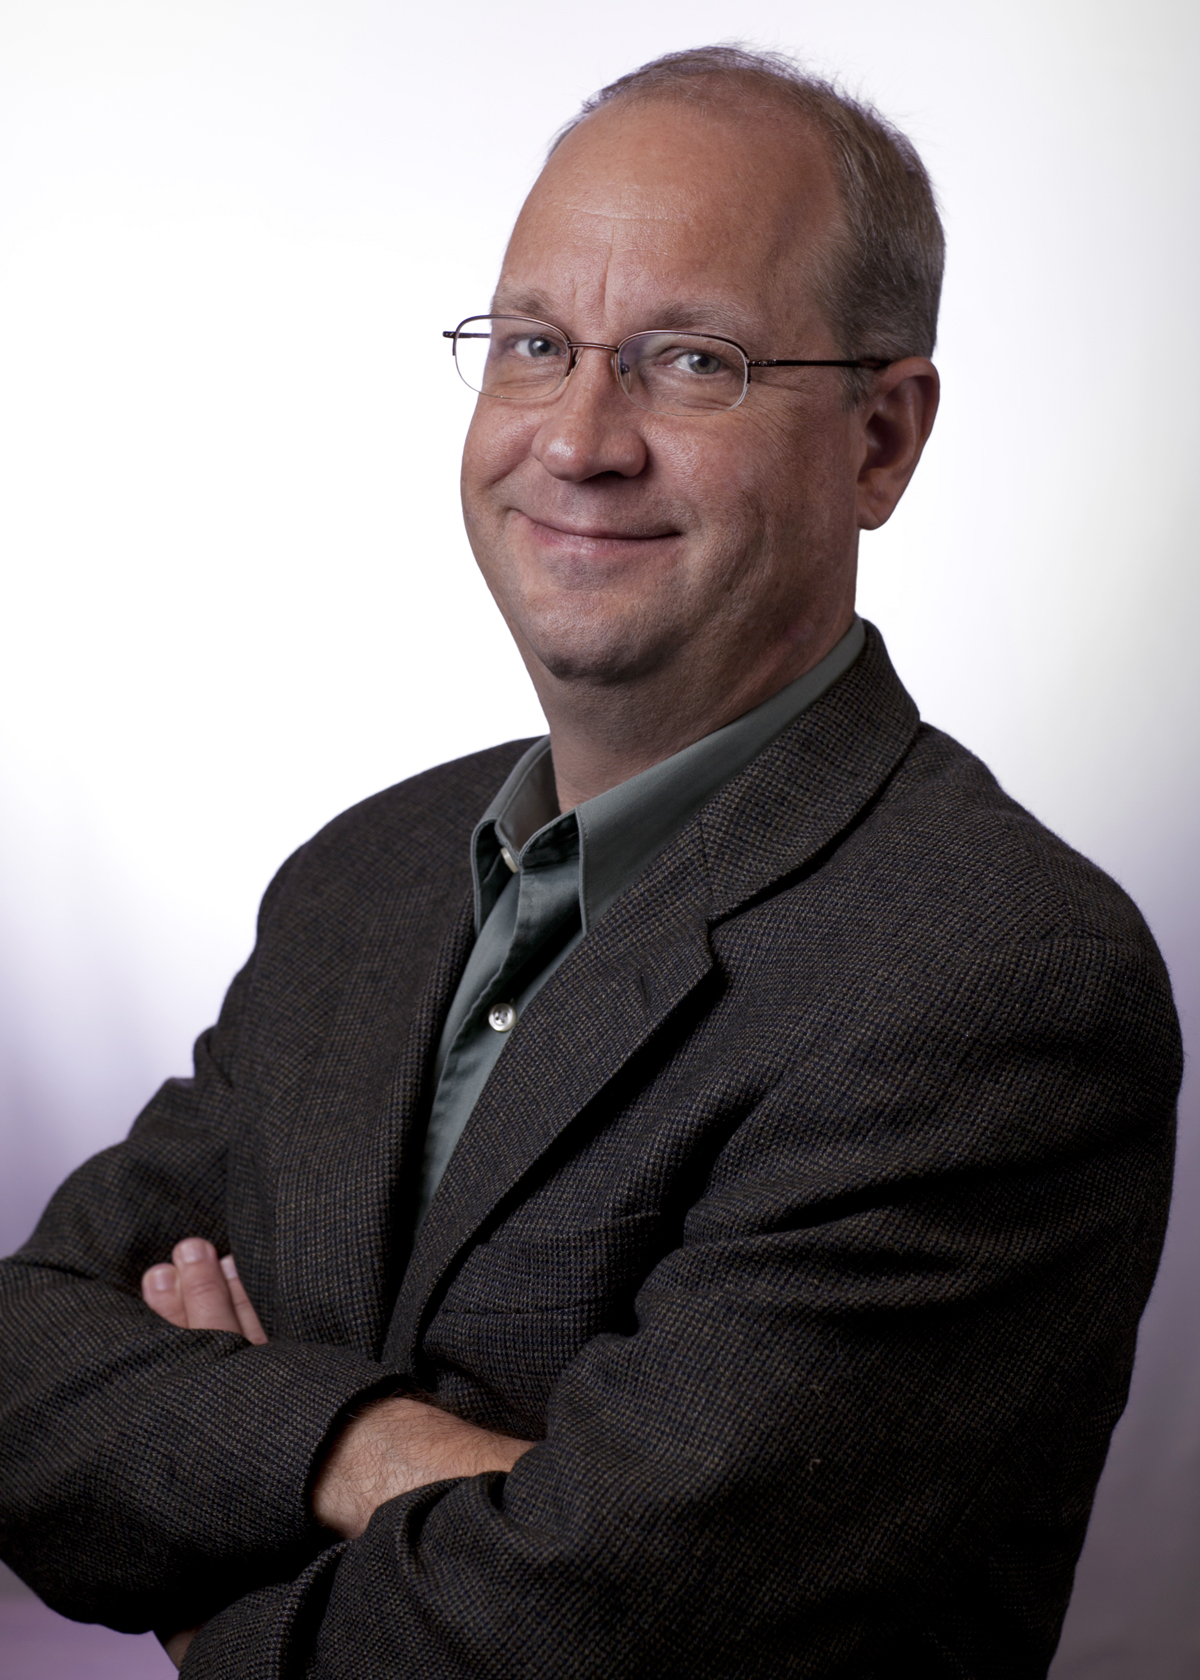 Professor Chris Staiger